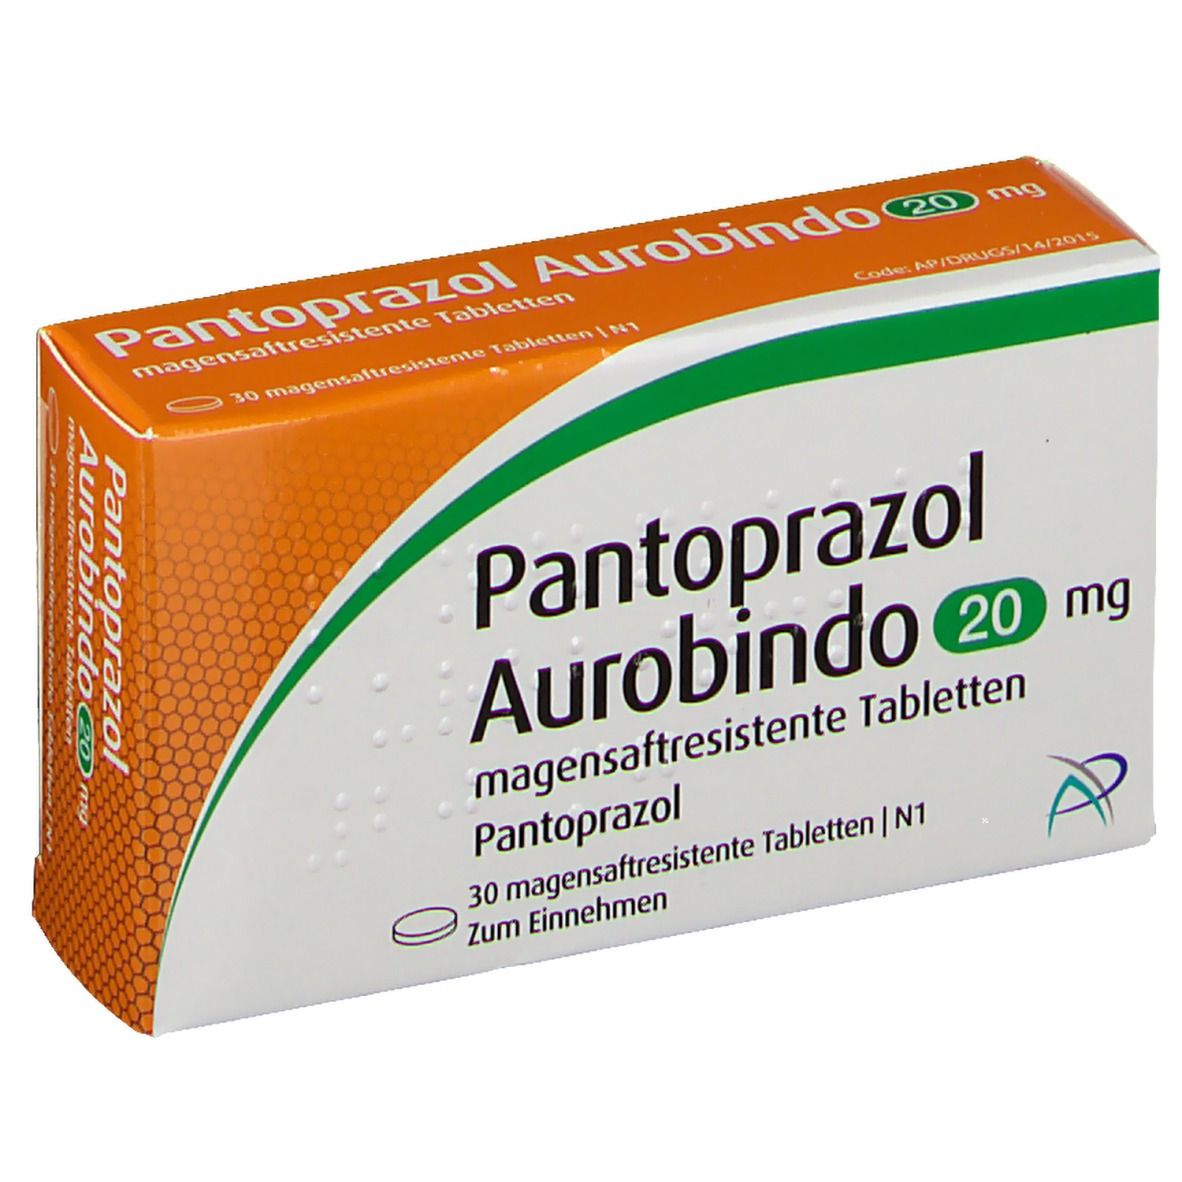 Пантопразол отзывы врачей. Пантопразол 20 мг. Пантопразол 40 мг. Пантопразол канон 20 мг. Пантопразол Mepha 40 мг.